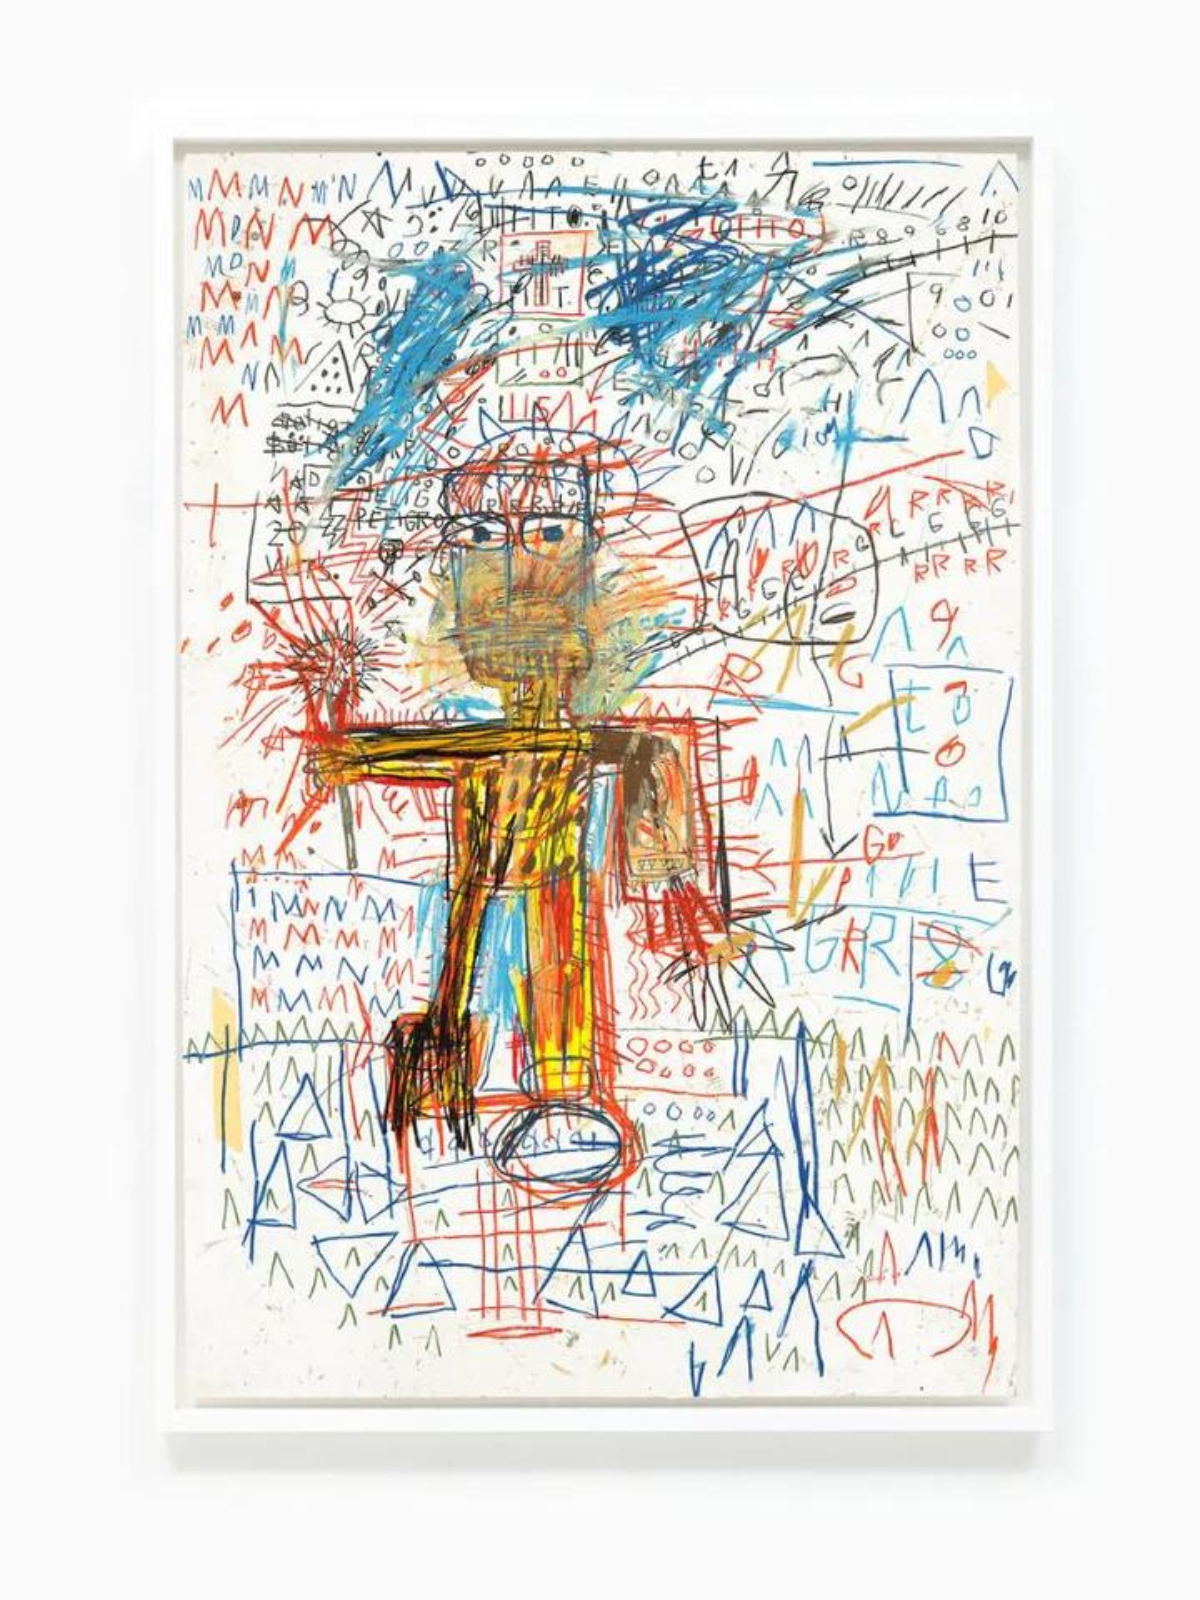 Jean-Michel Basquiat Artwork for sale, The Figure, 1982/2023